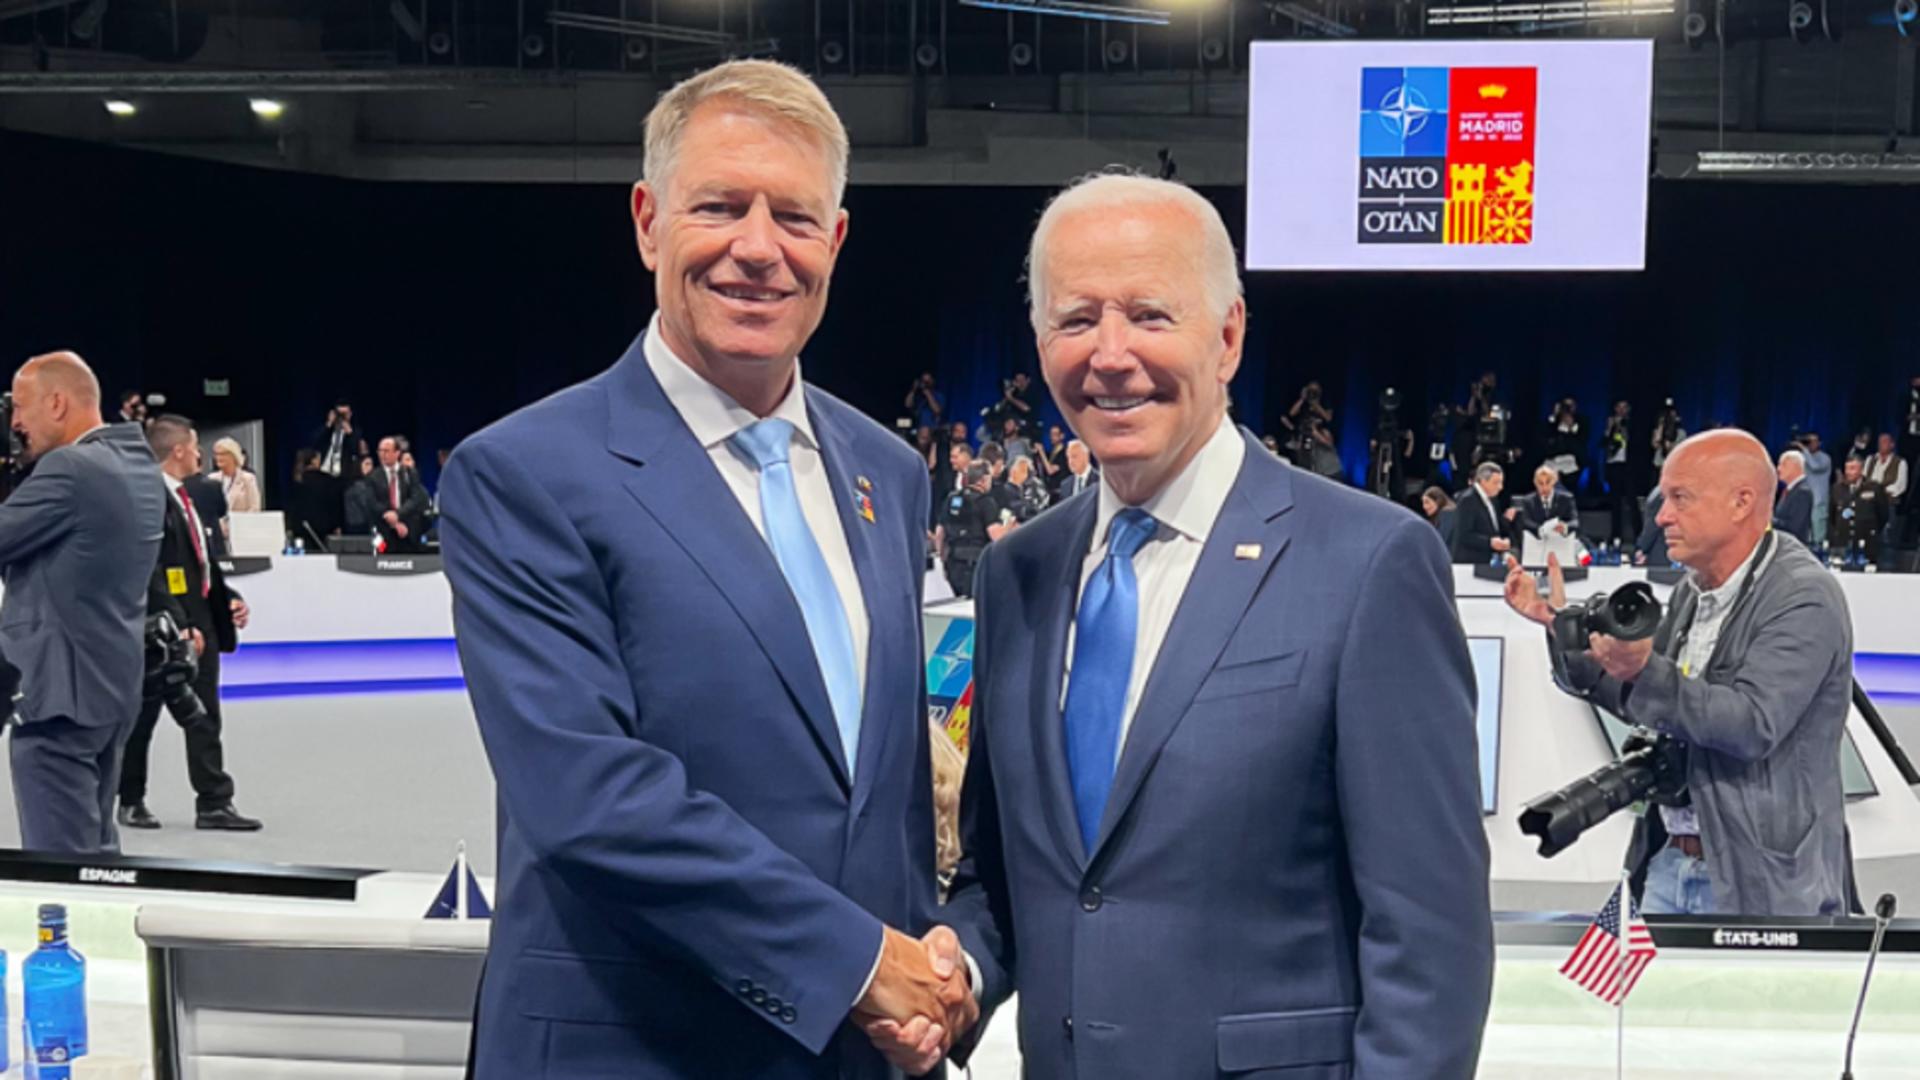 Klaus Iohannis și Joe Biden. Summit NATO - Madrid, 29 iunie 2022 Foto: Presidency.ro